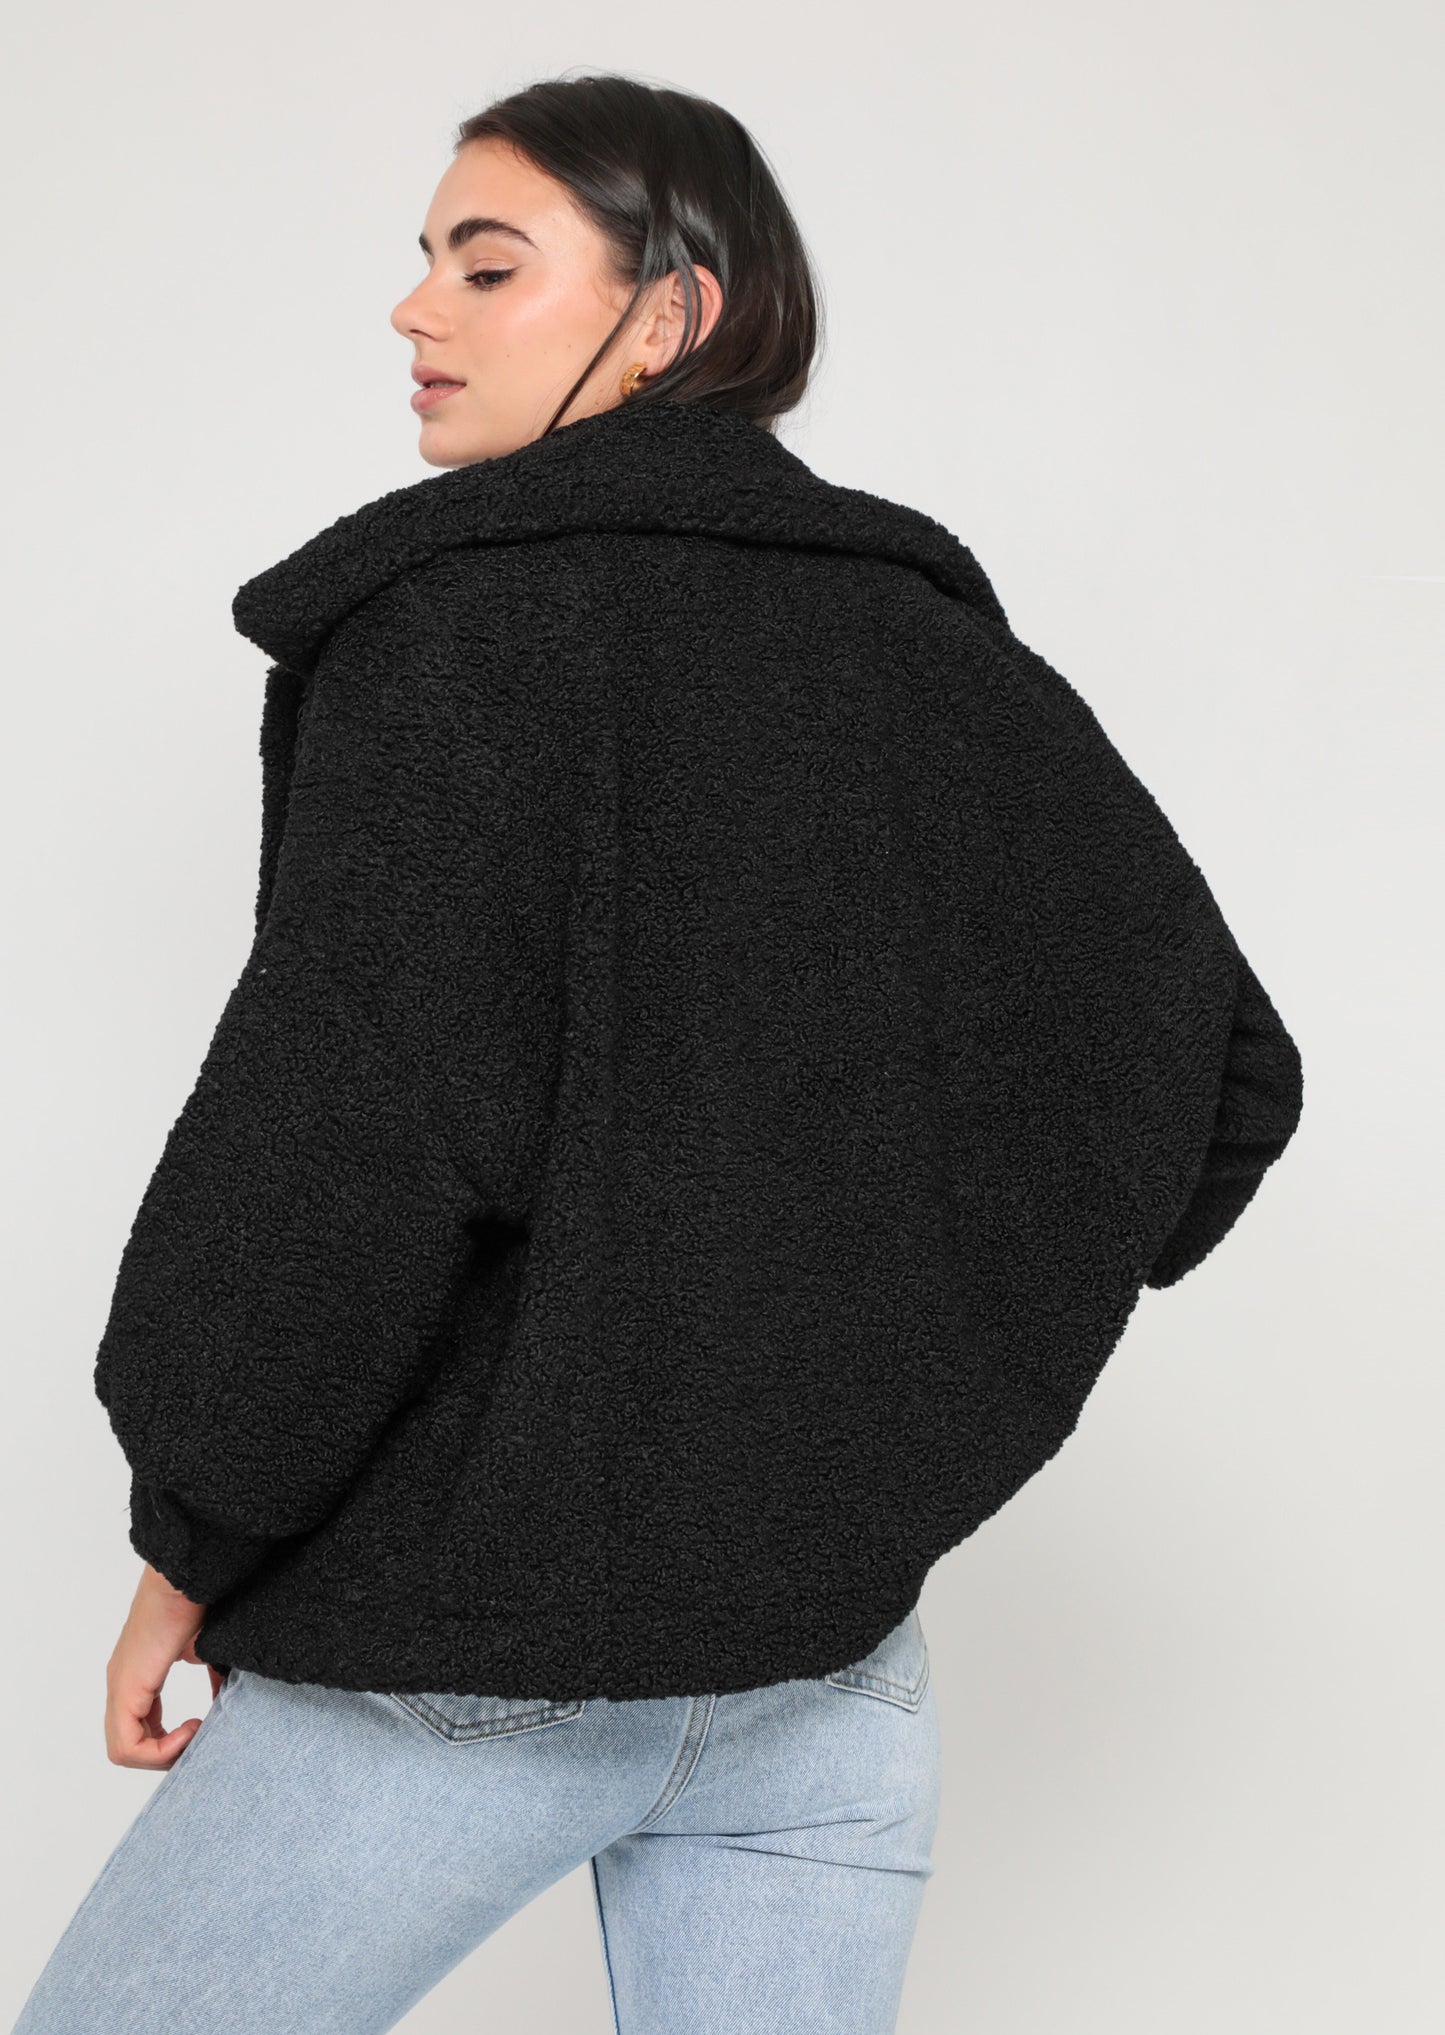 Oversize teddy borg jacket in black